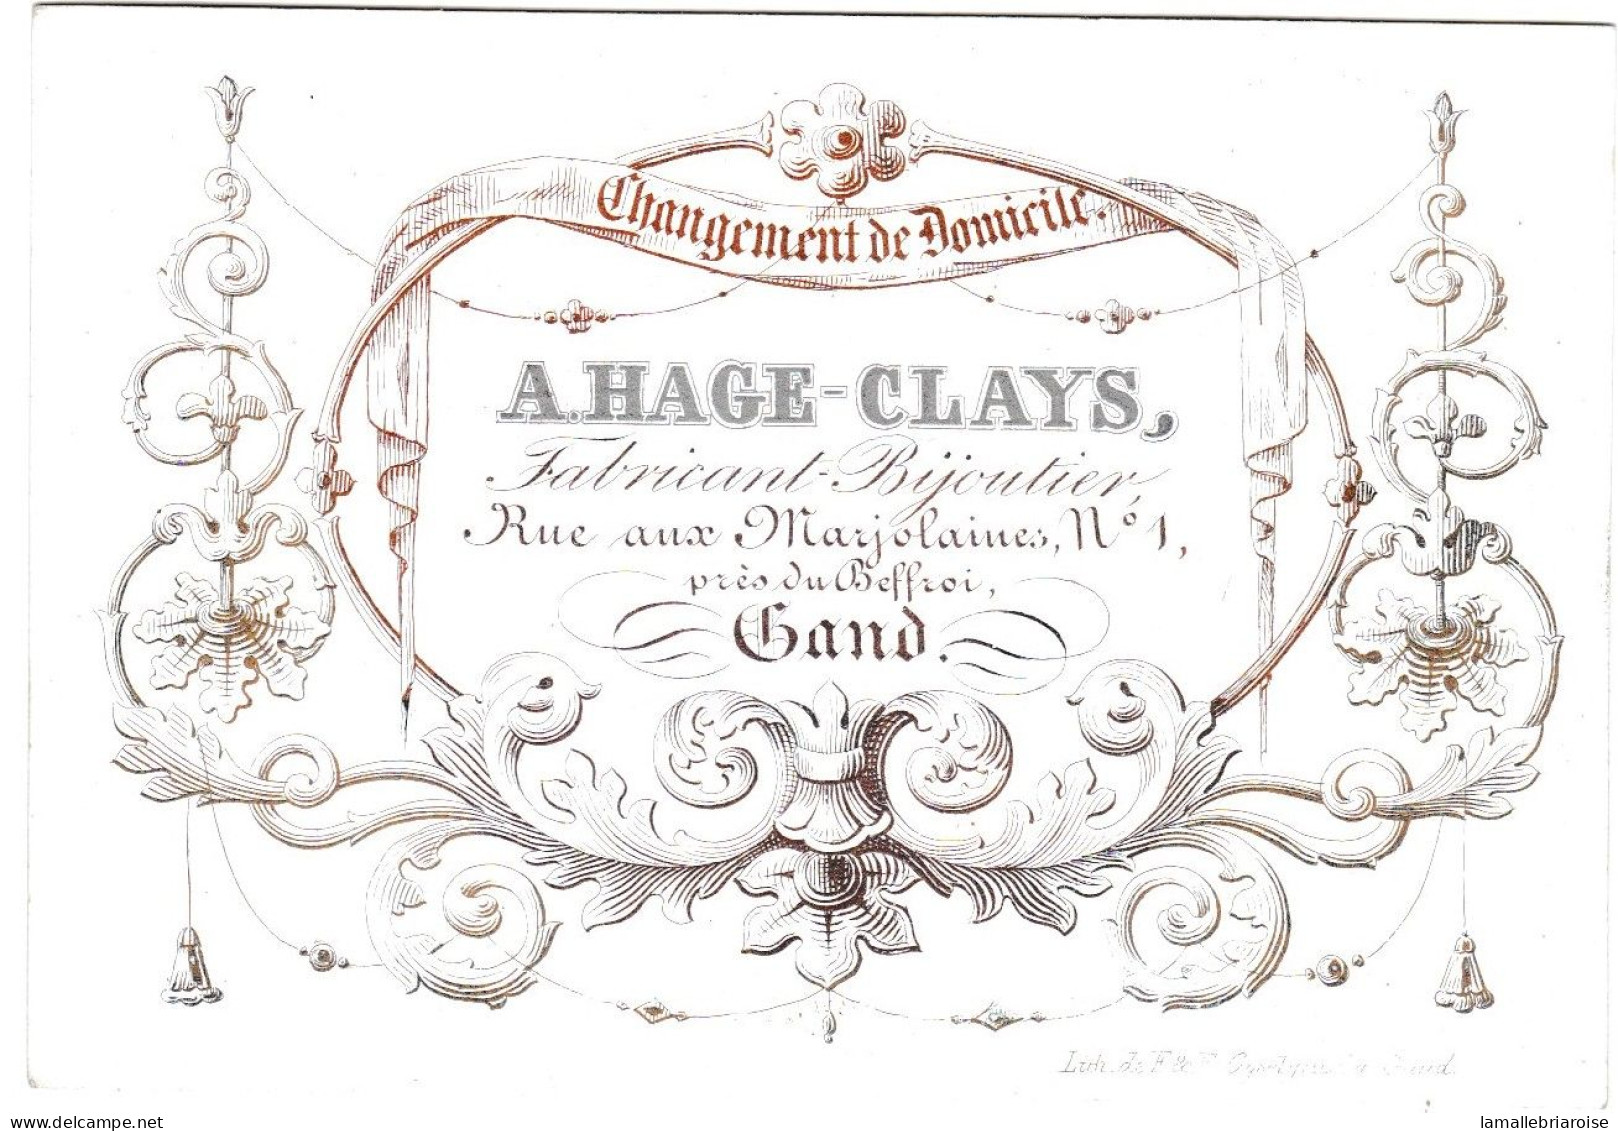 Belgique "Carte Porcelaine" Porseleinkaart, A.Hage - Clays, Bijoutier, Gand, Dim:108x 75mm - Porseleinkaarten